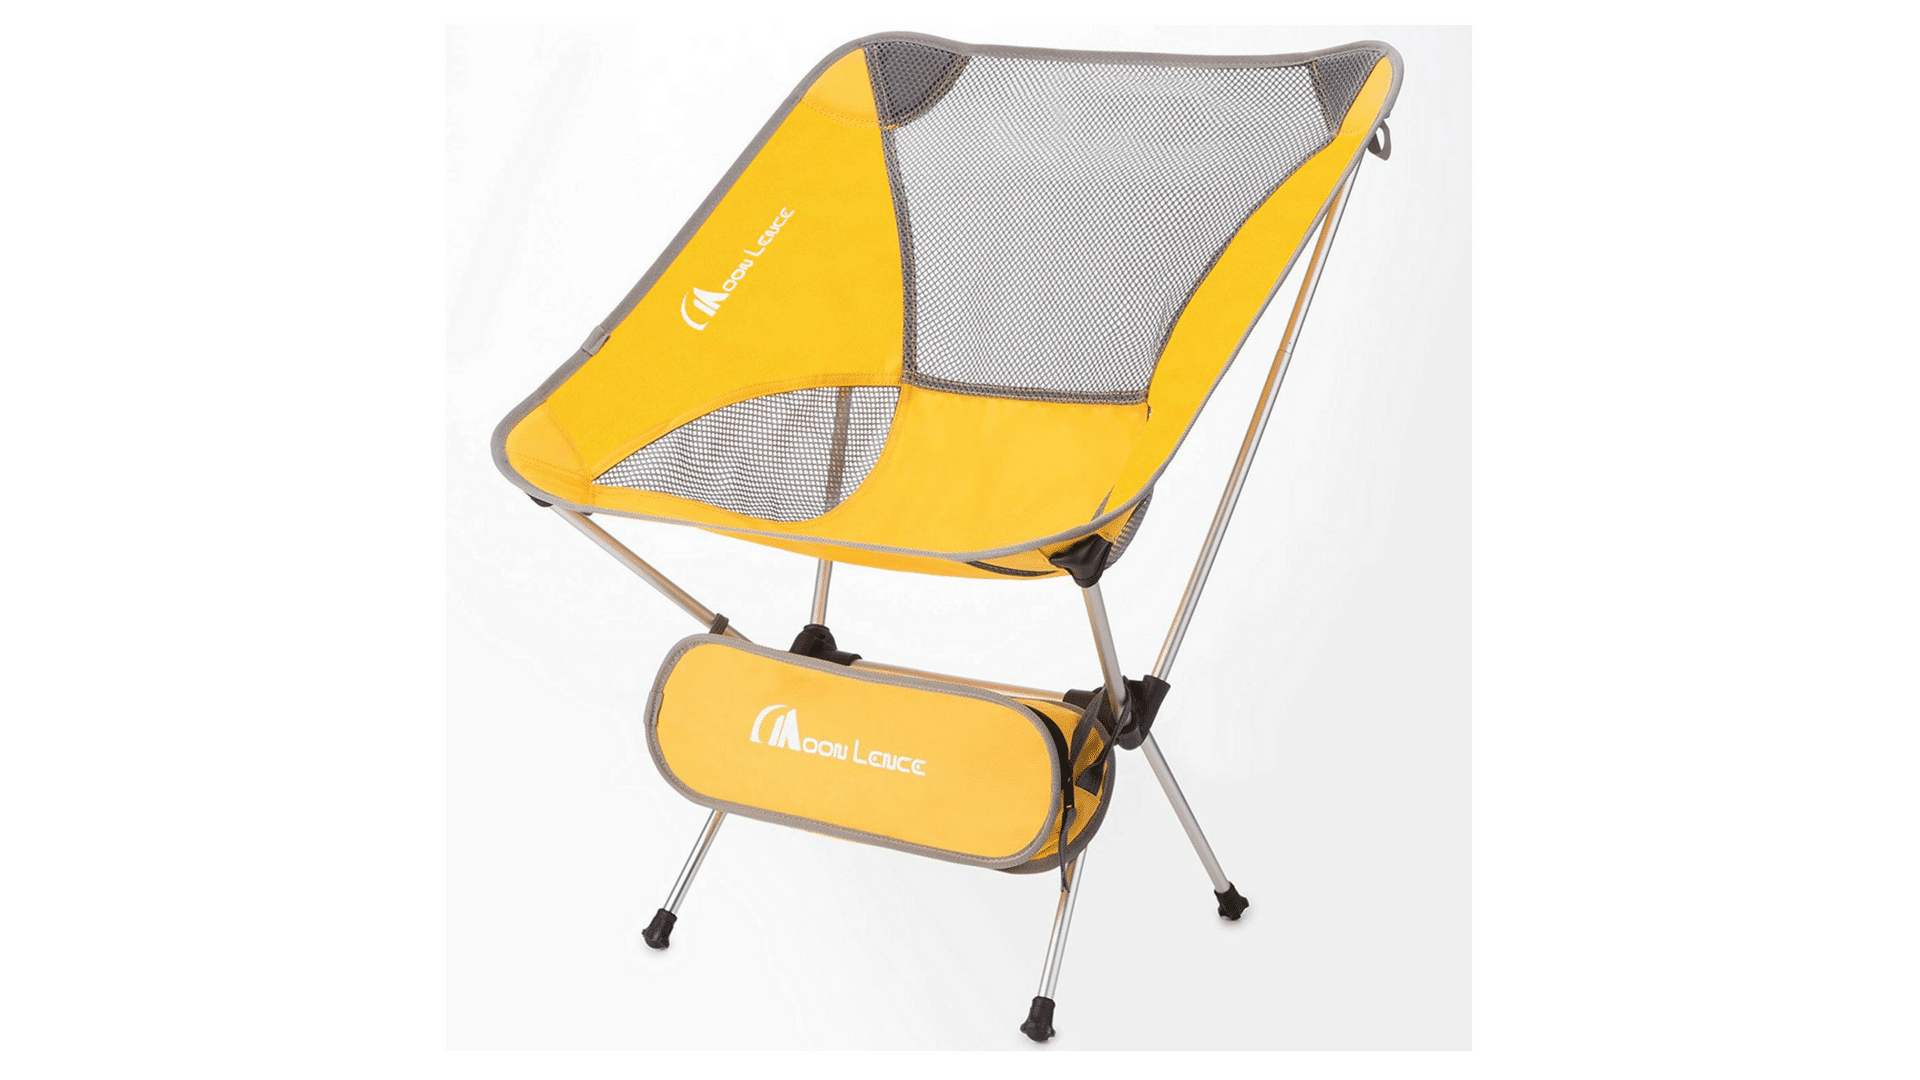 Moon Lence Camping Chair